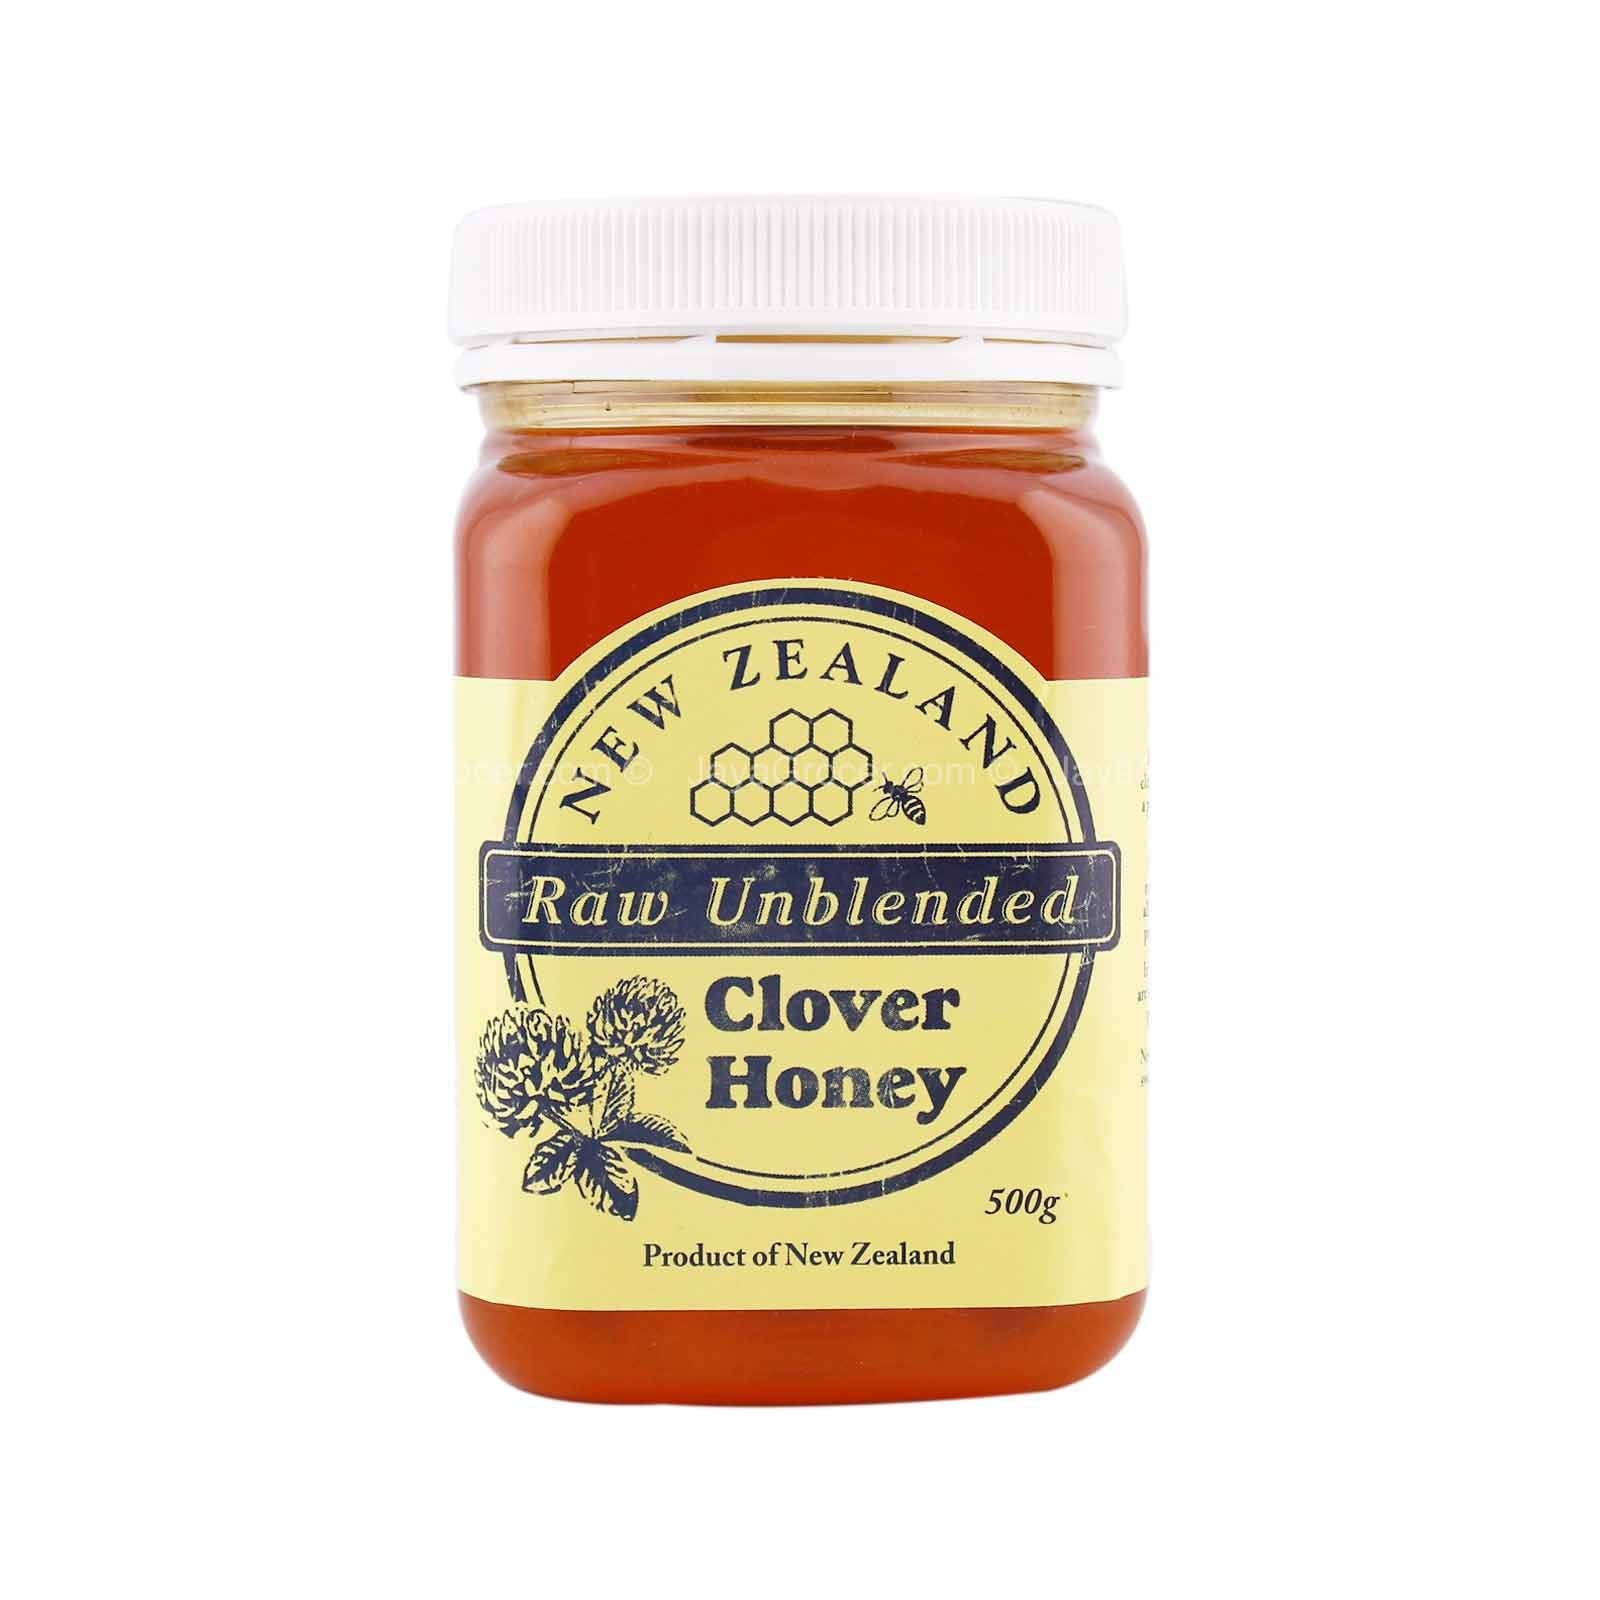 Honey　Clover　Zealand　Unblended　Raw　New　500g